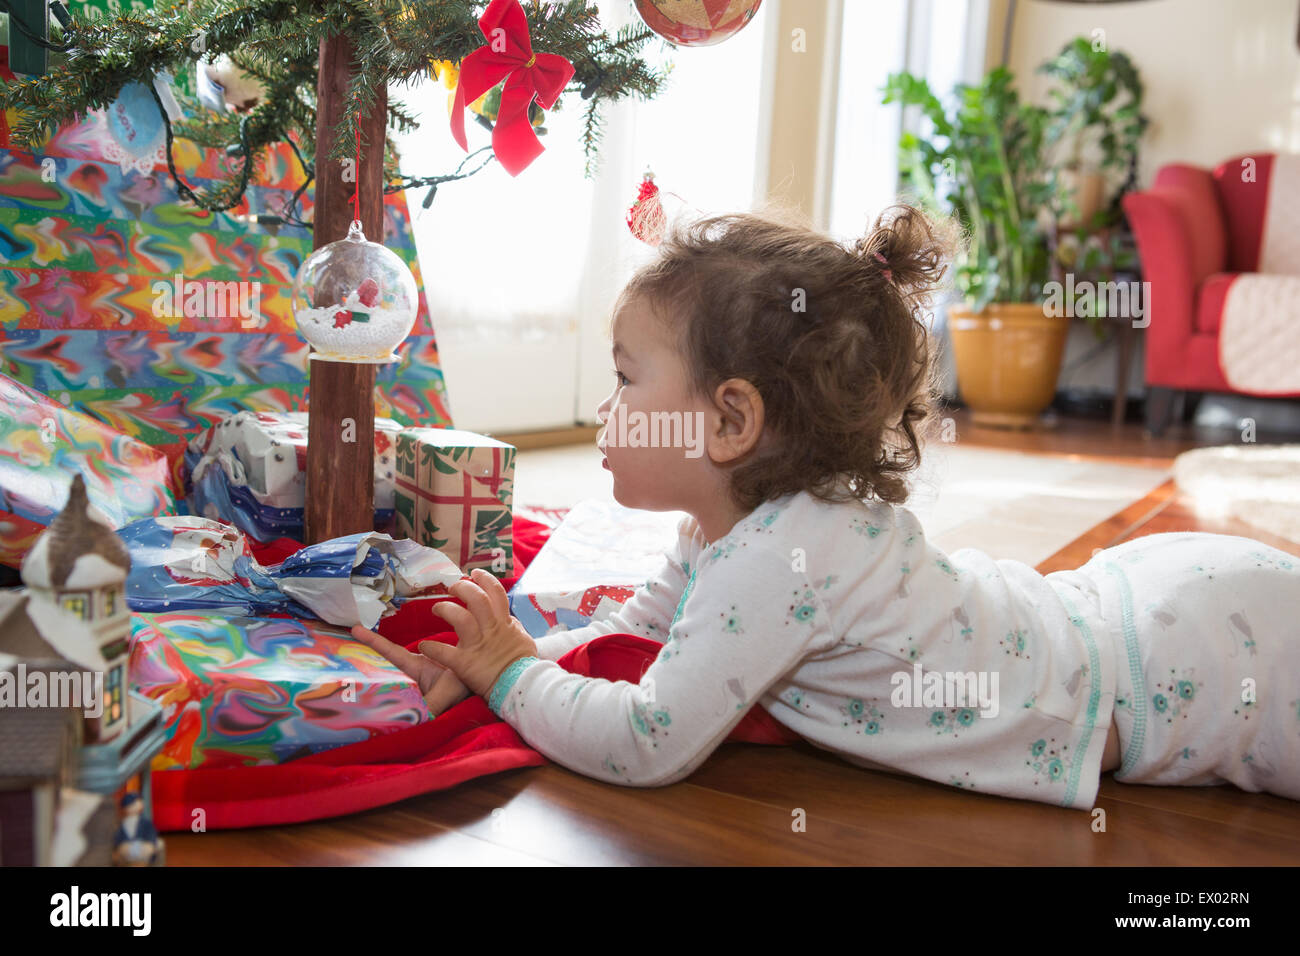 Little girl admiring Christmas ornaments on tree Stock Photo